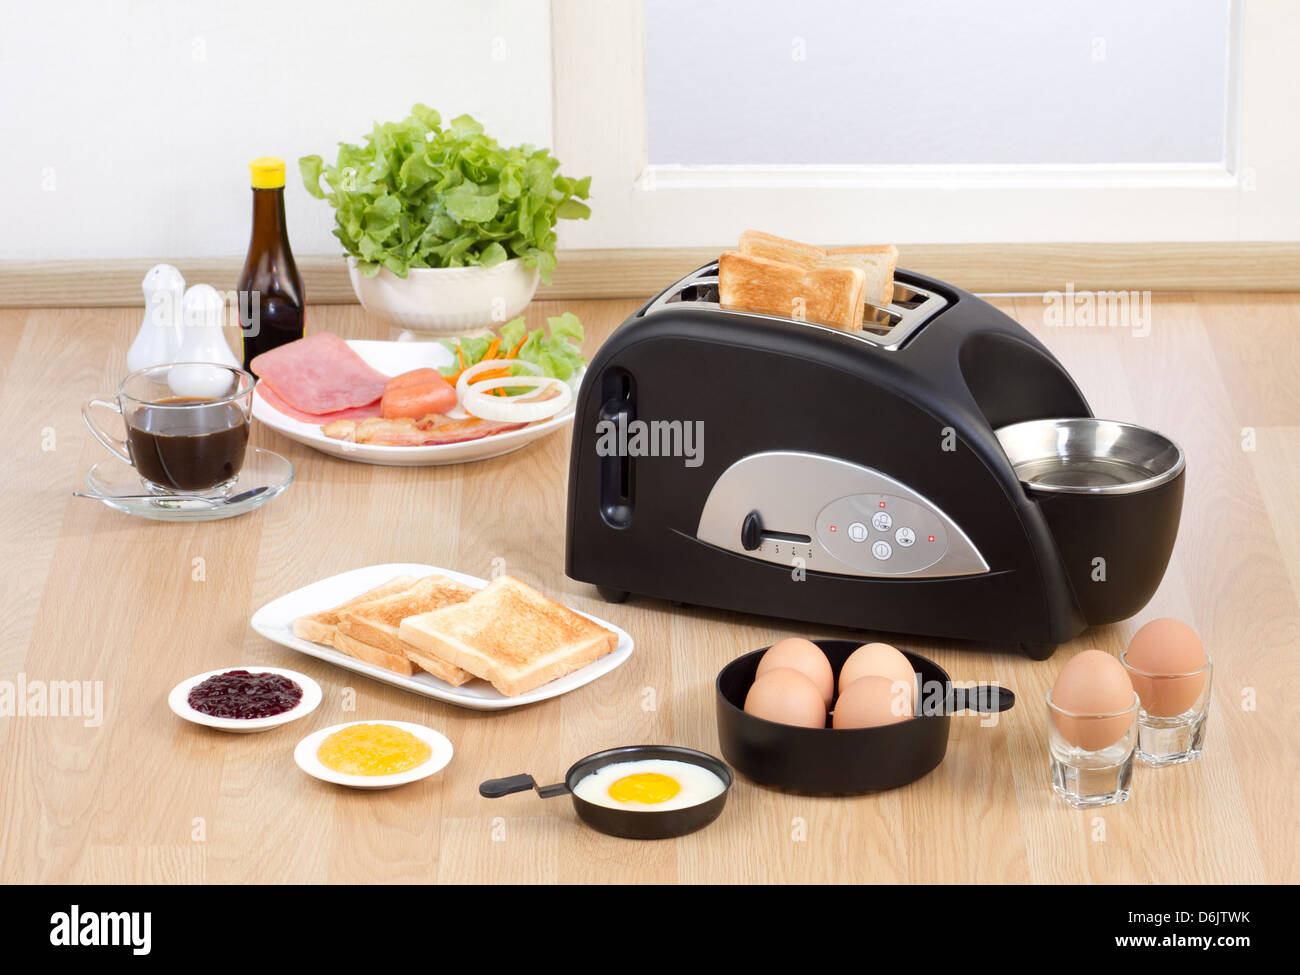 https://c8.alamy.com/comp/D6JTWK/multi-purpose-bread-toaster-it-has-function-for-boiling-and-frying-D6JTWK.jpg